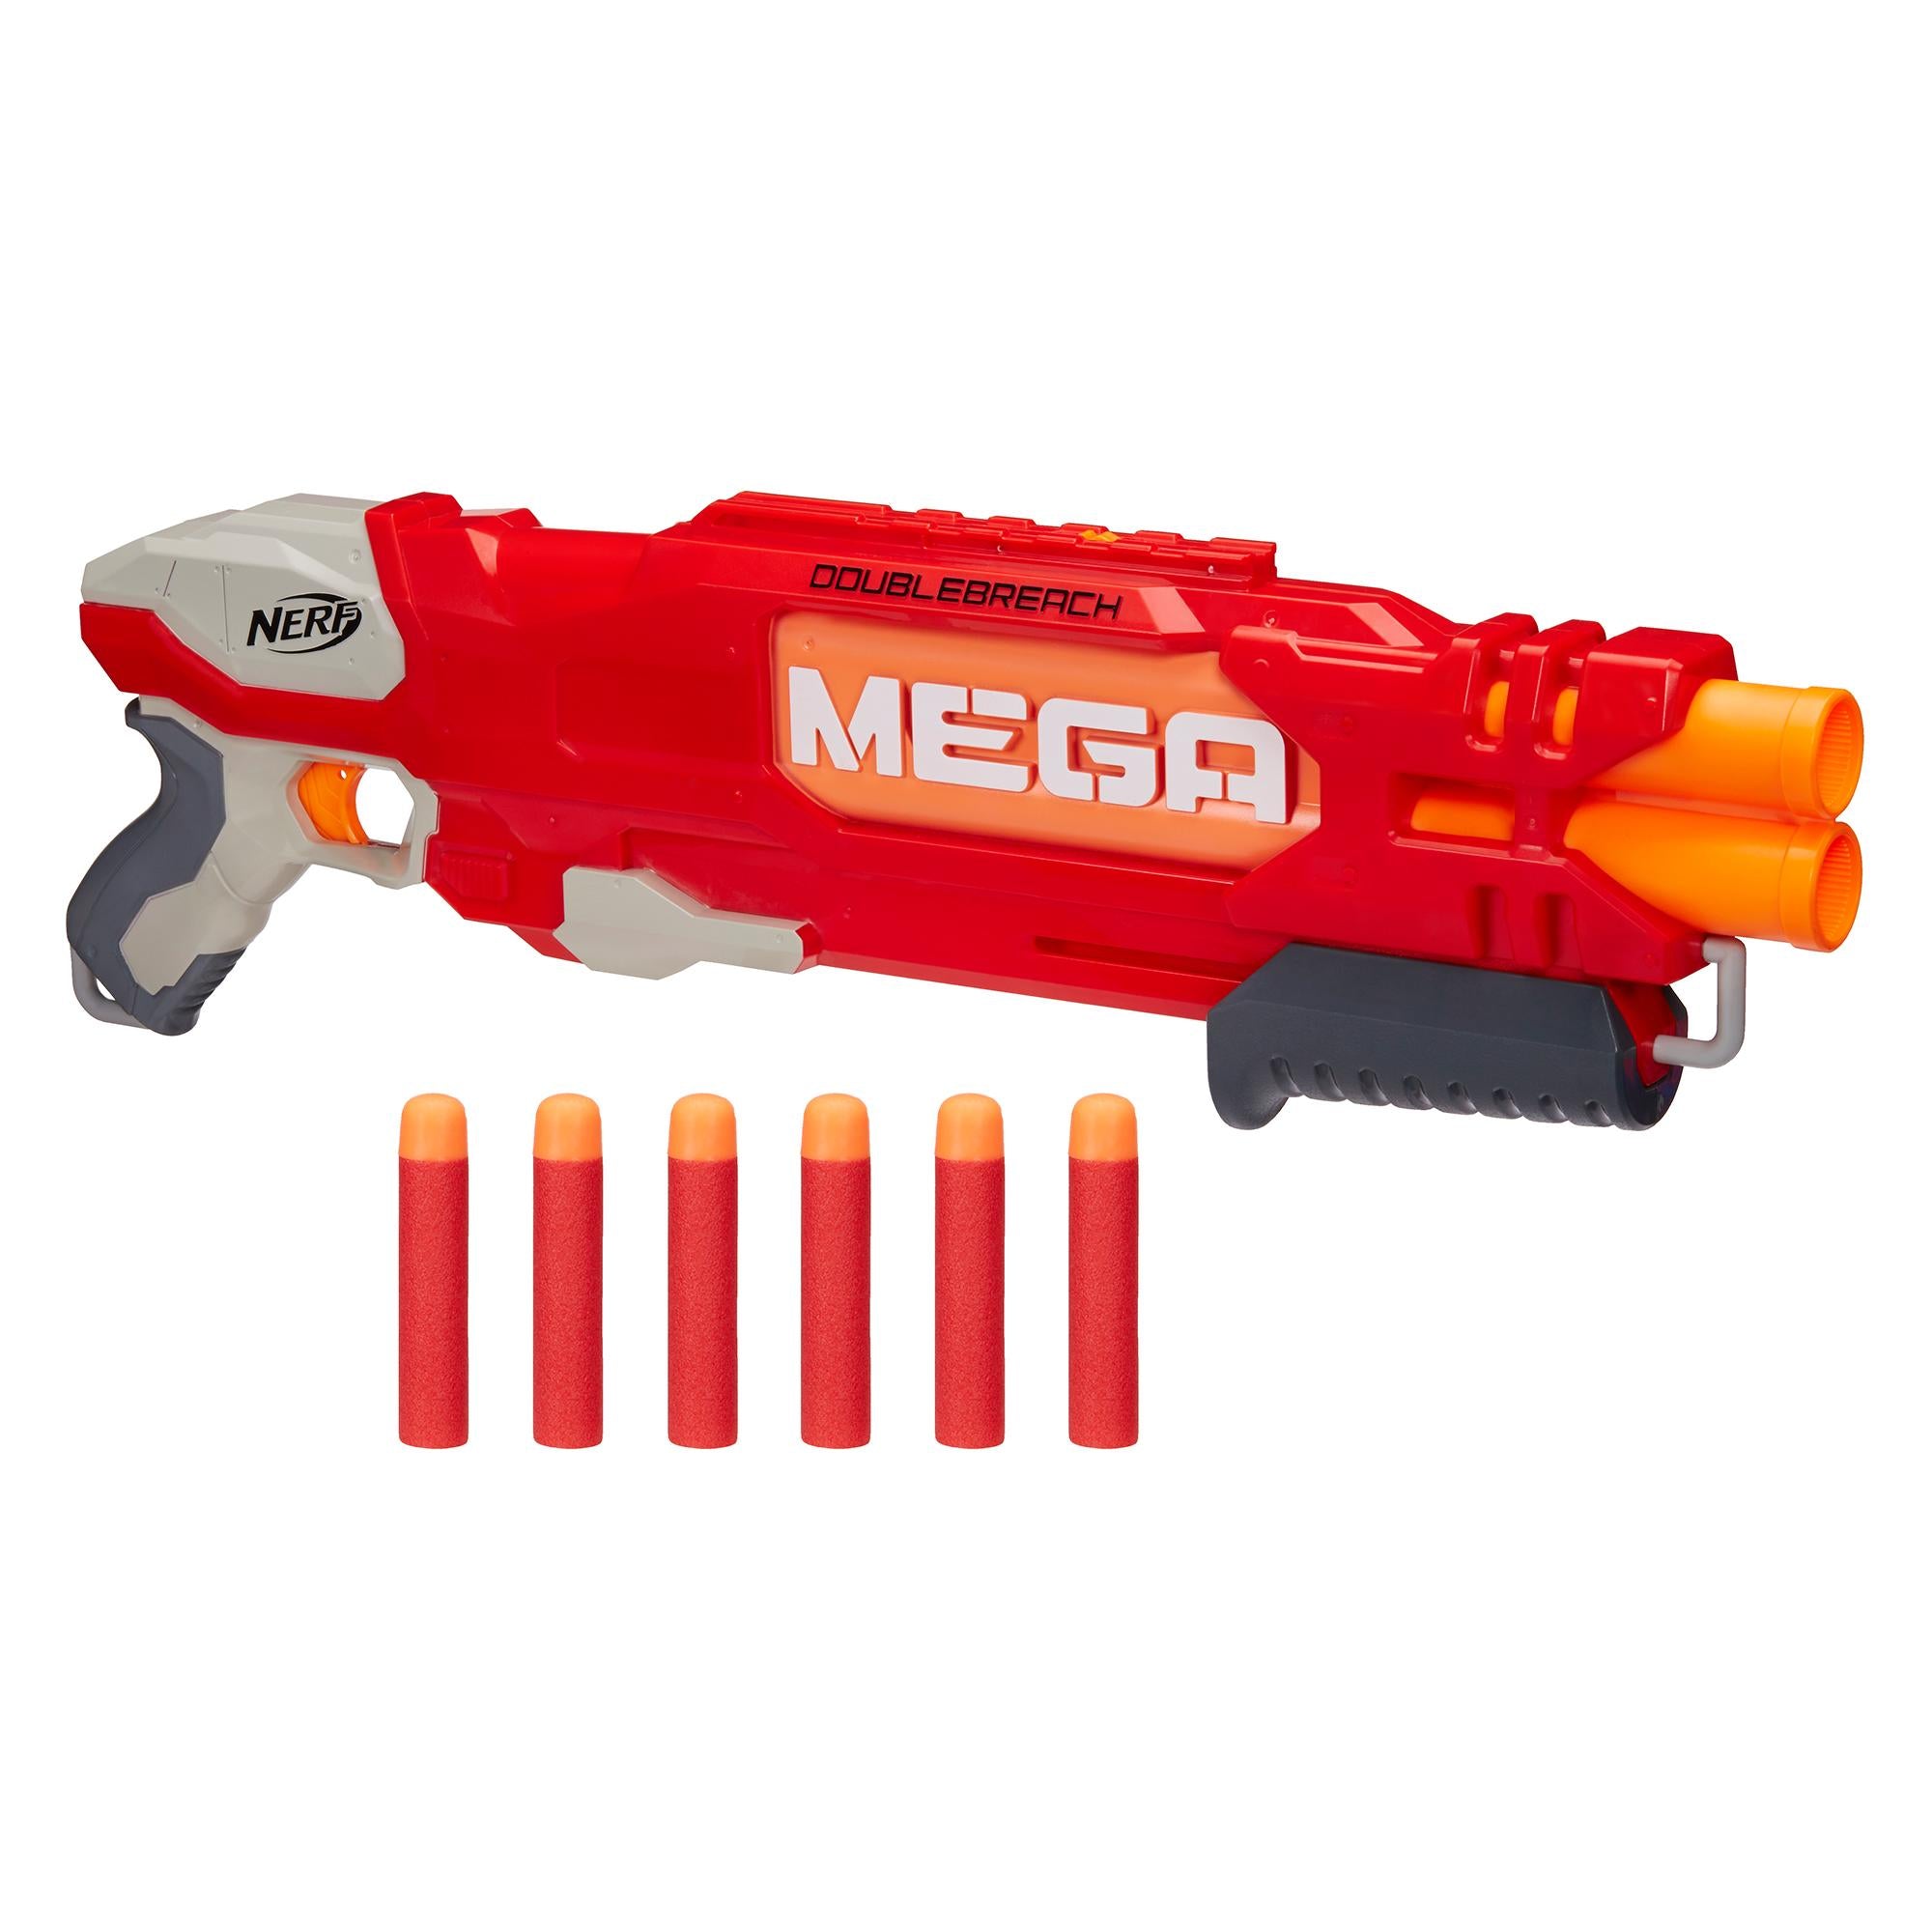 NERF N-Strike Mega Double Breach Toy Blaster